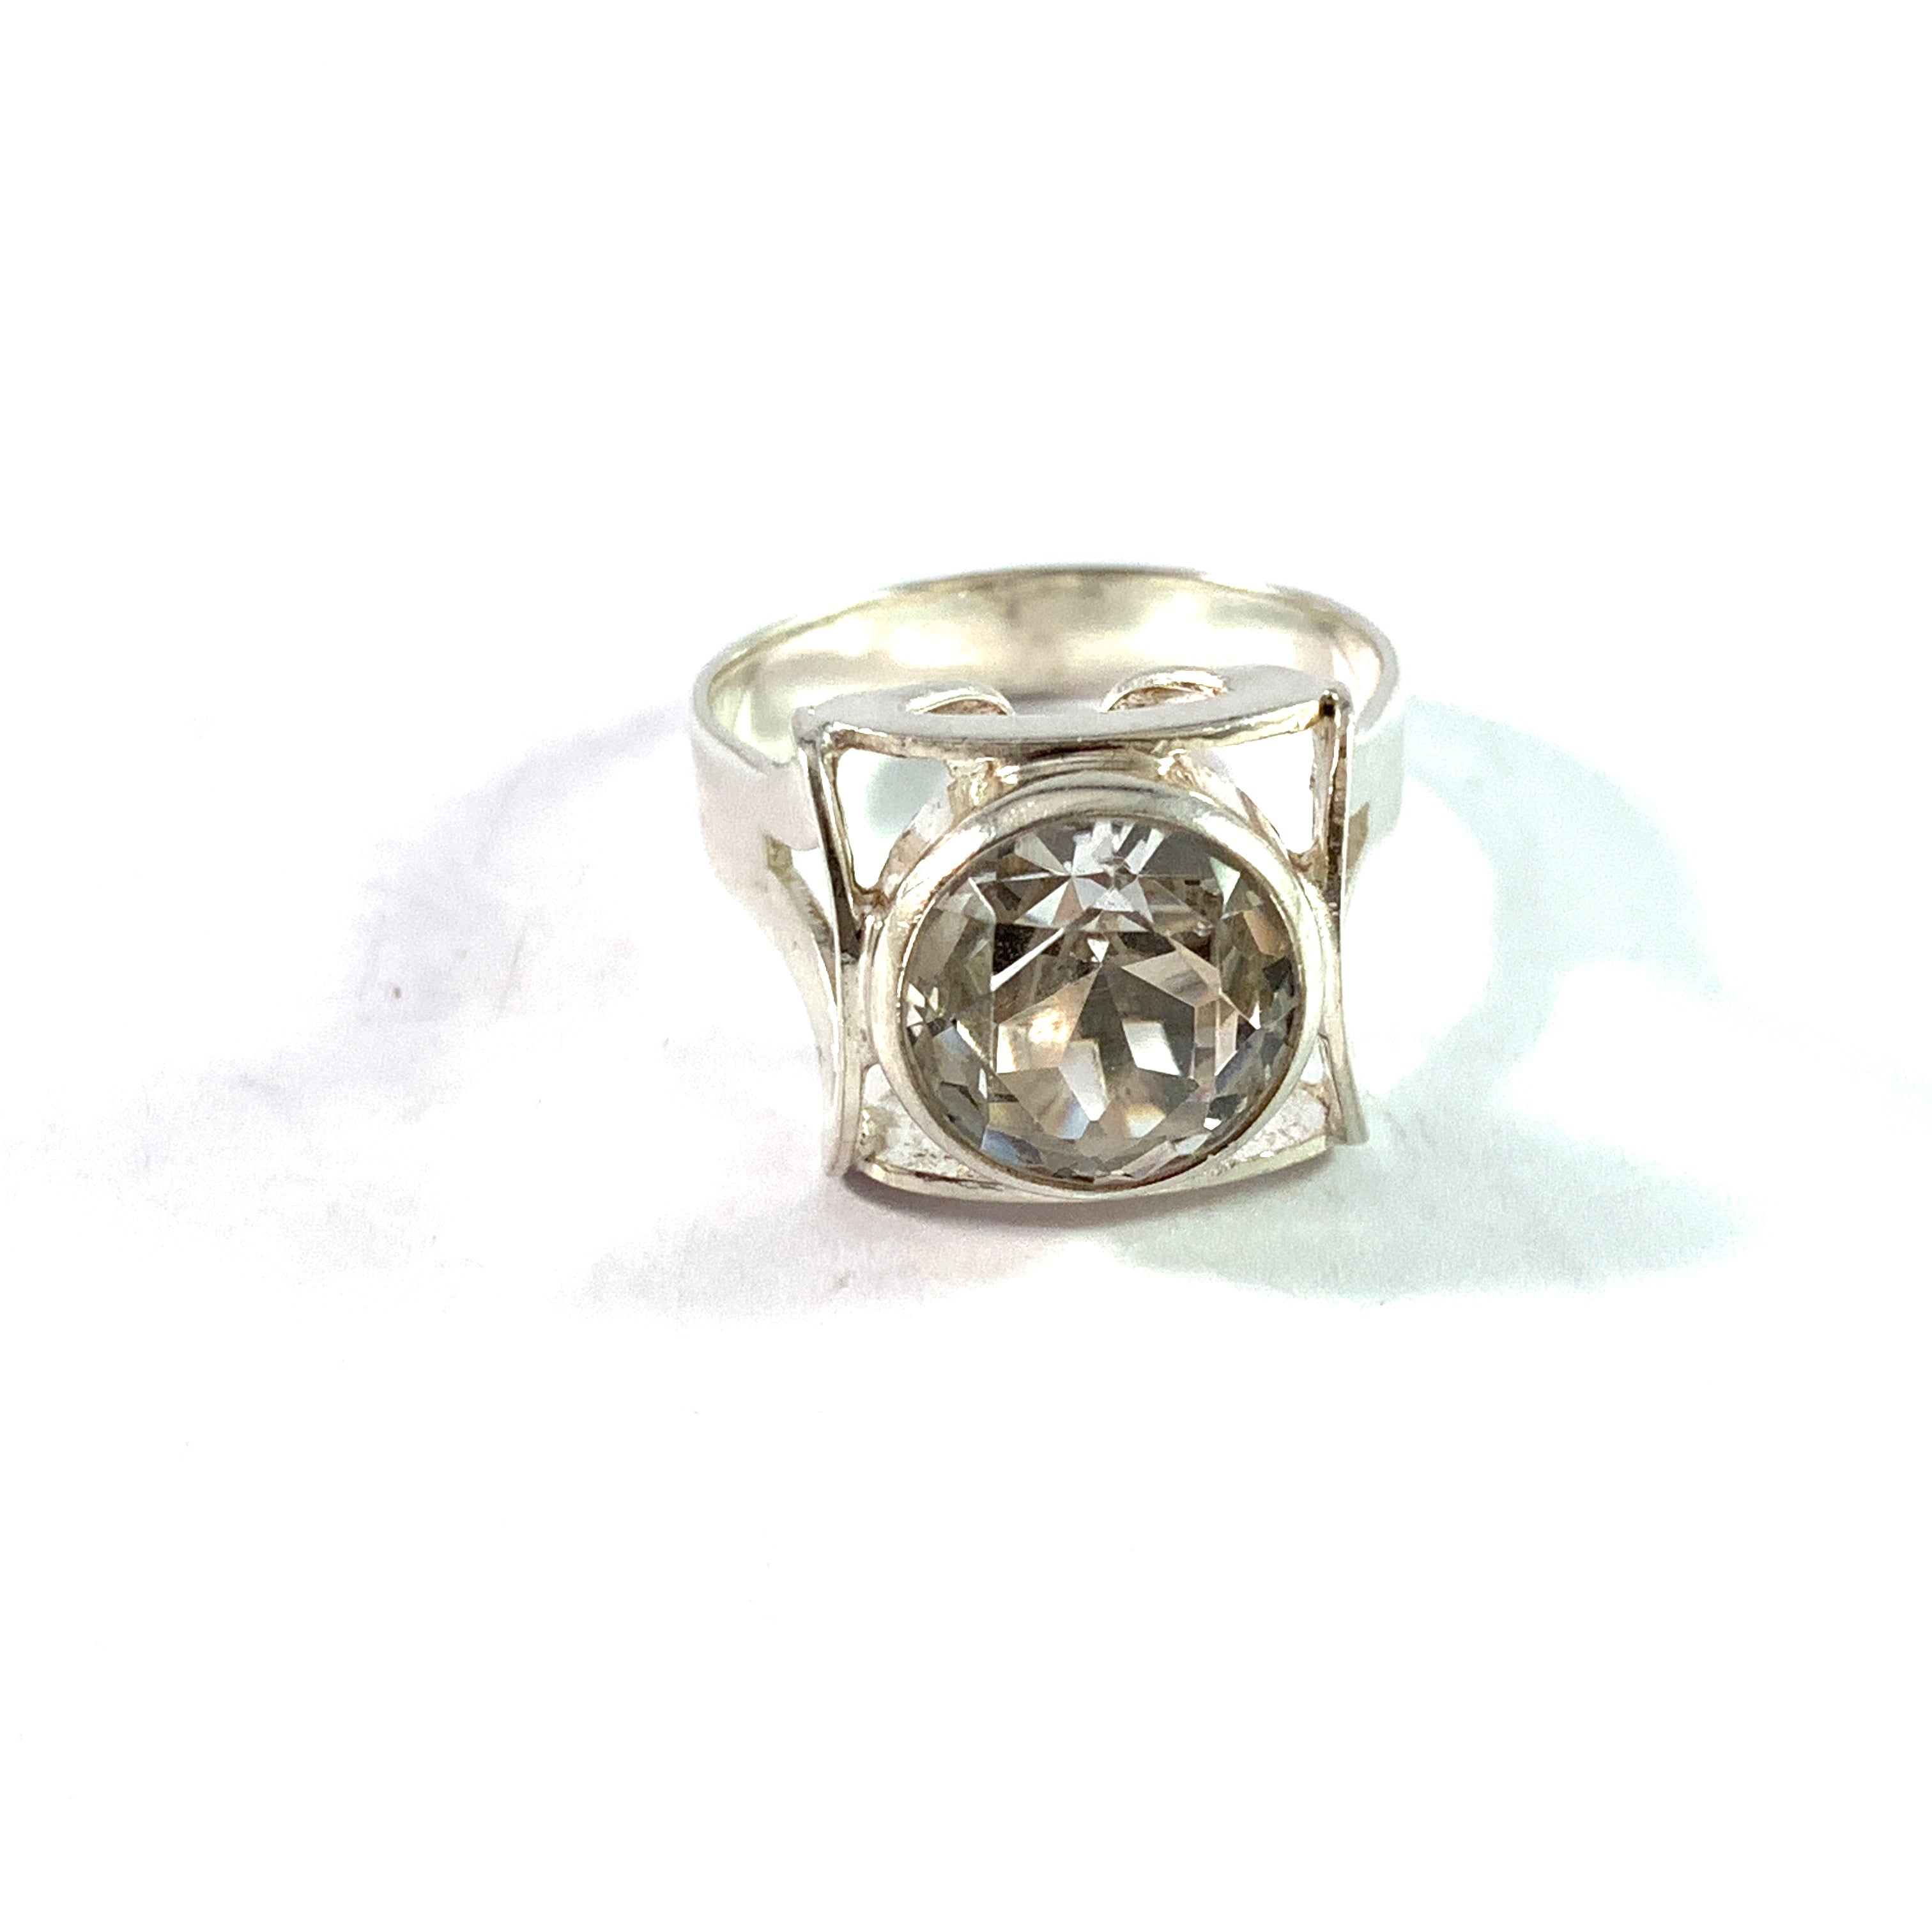 Germany 1960-70s Vintage Modernist Solid 835 Silver Rock Crystal Ring.